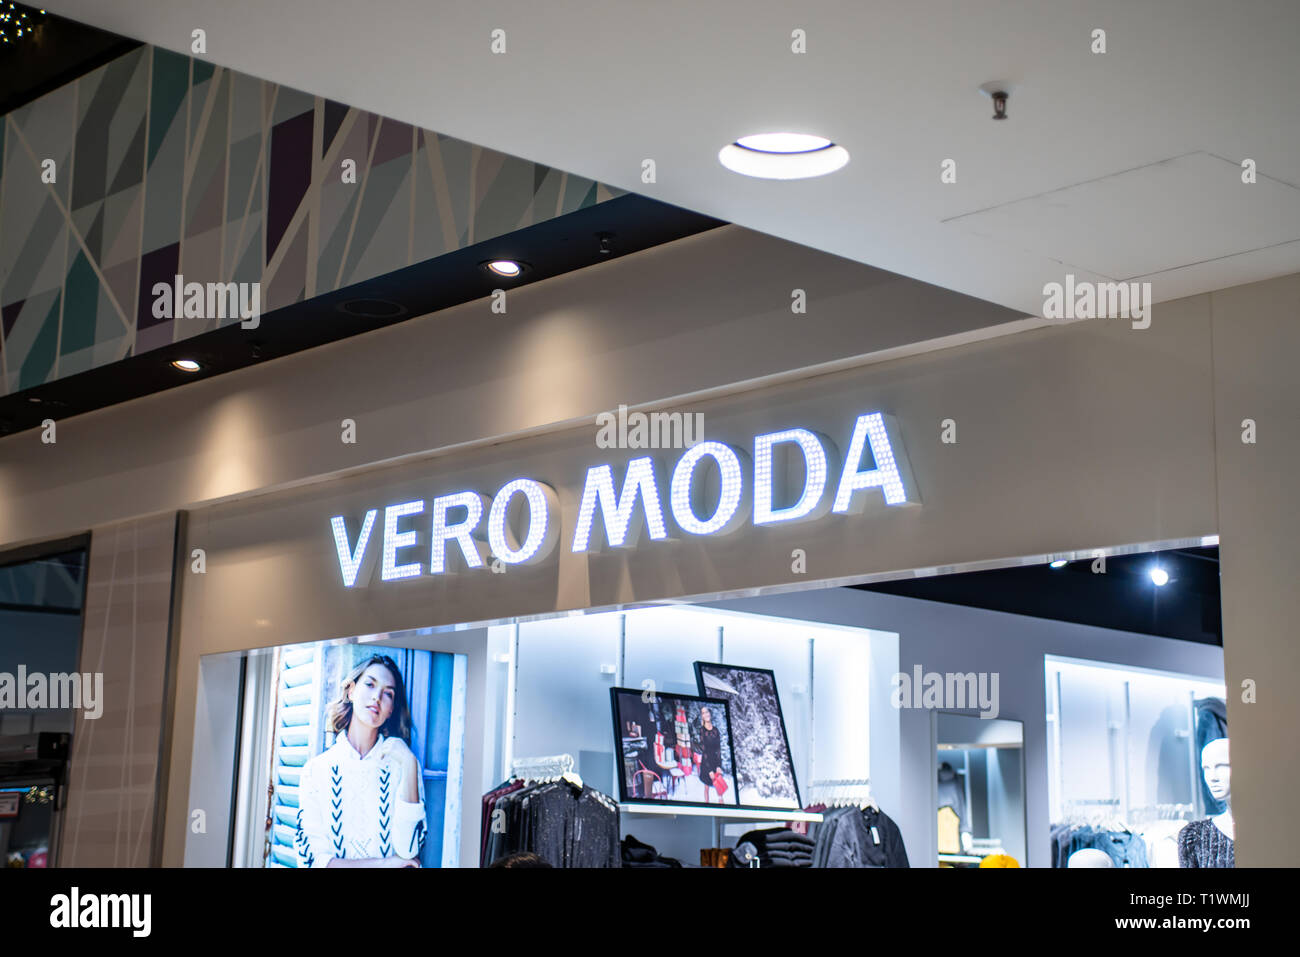 Vero Moda Logo High Resolution Stock Photography and Images - Alamy